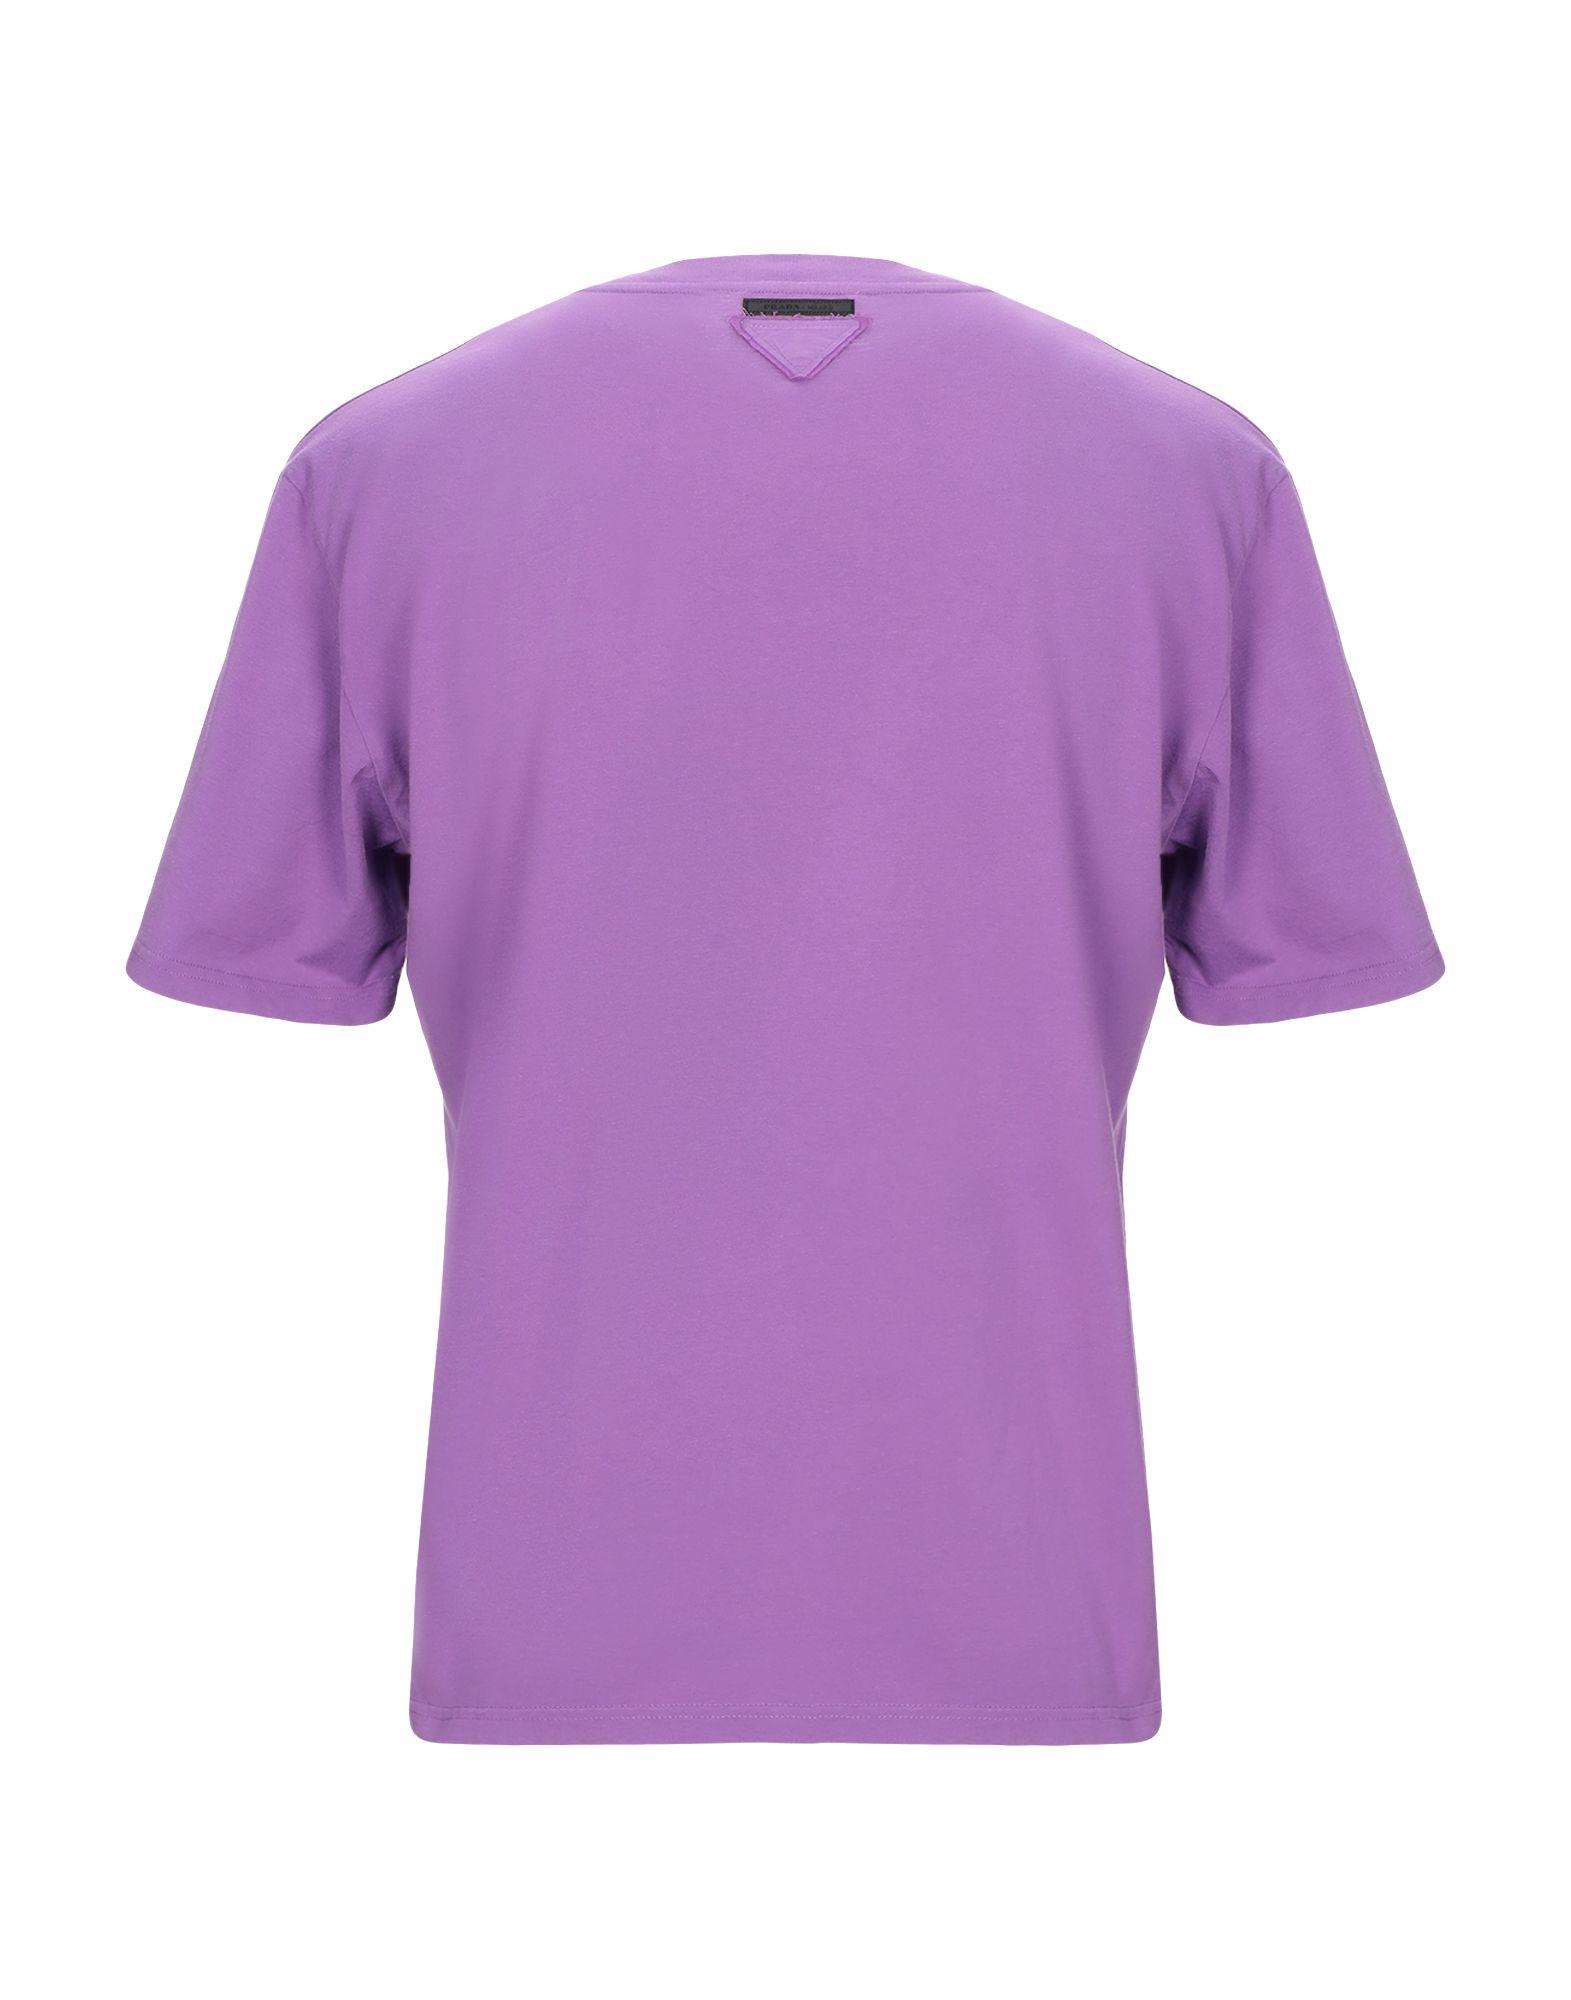 Prada T-shirt in Mauve (Purple) for Men - Lyst